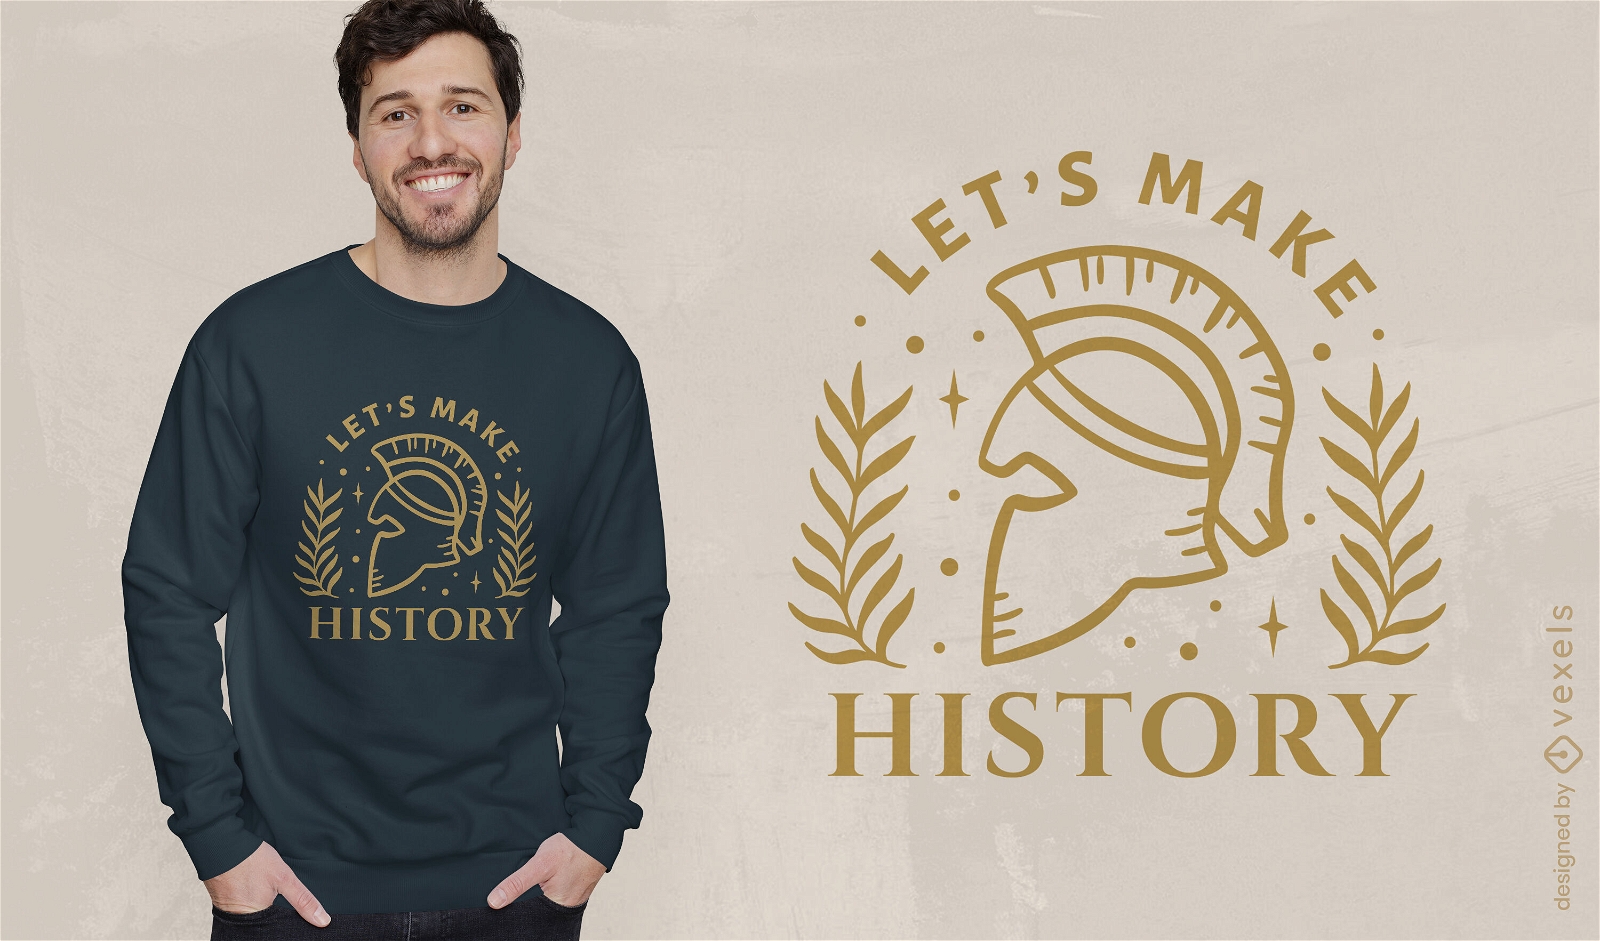 Knight history t-shirt design